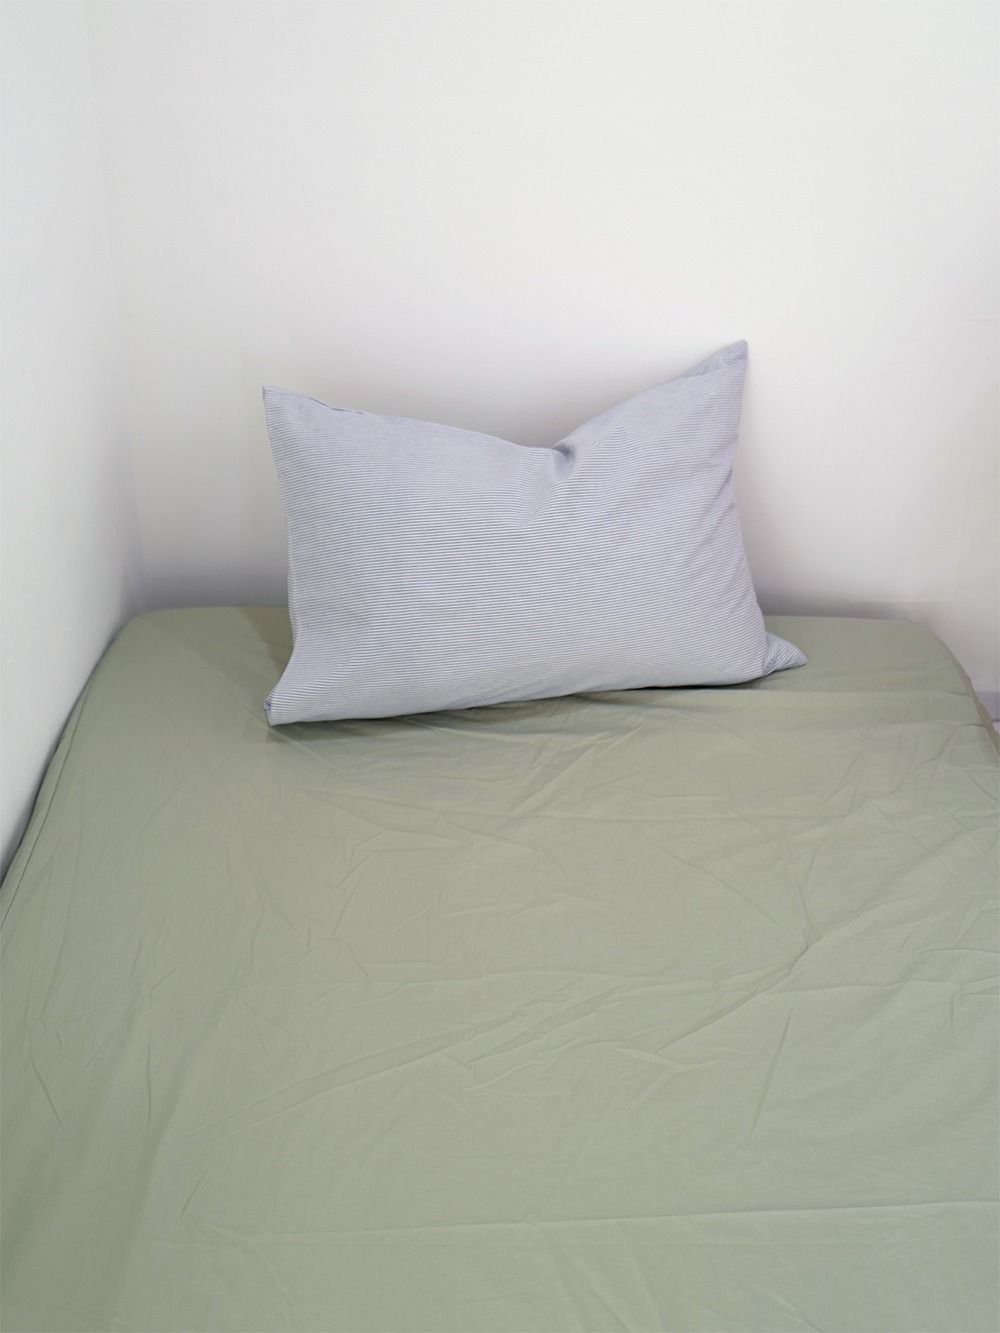 Matcha mattress cover